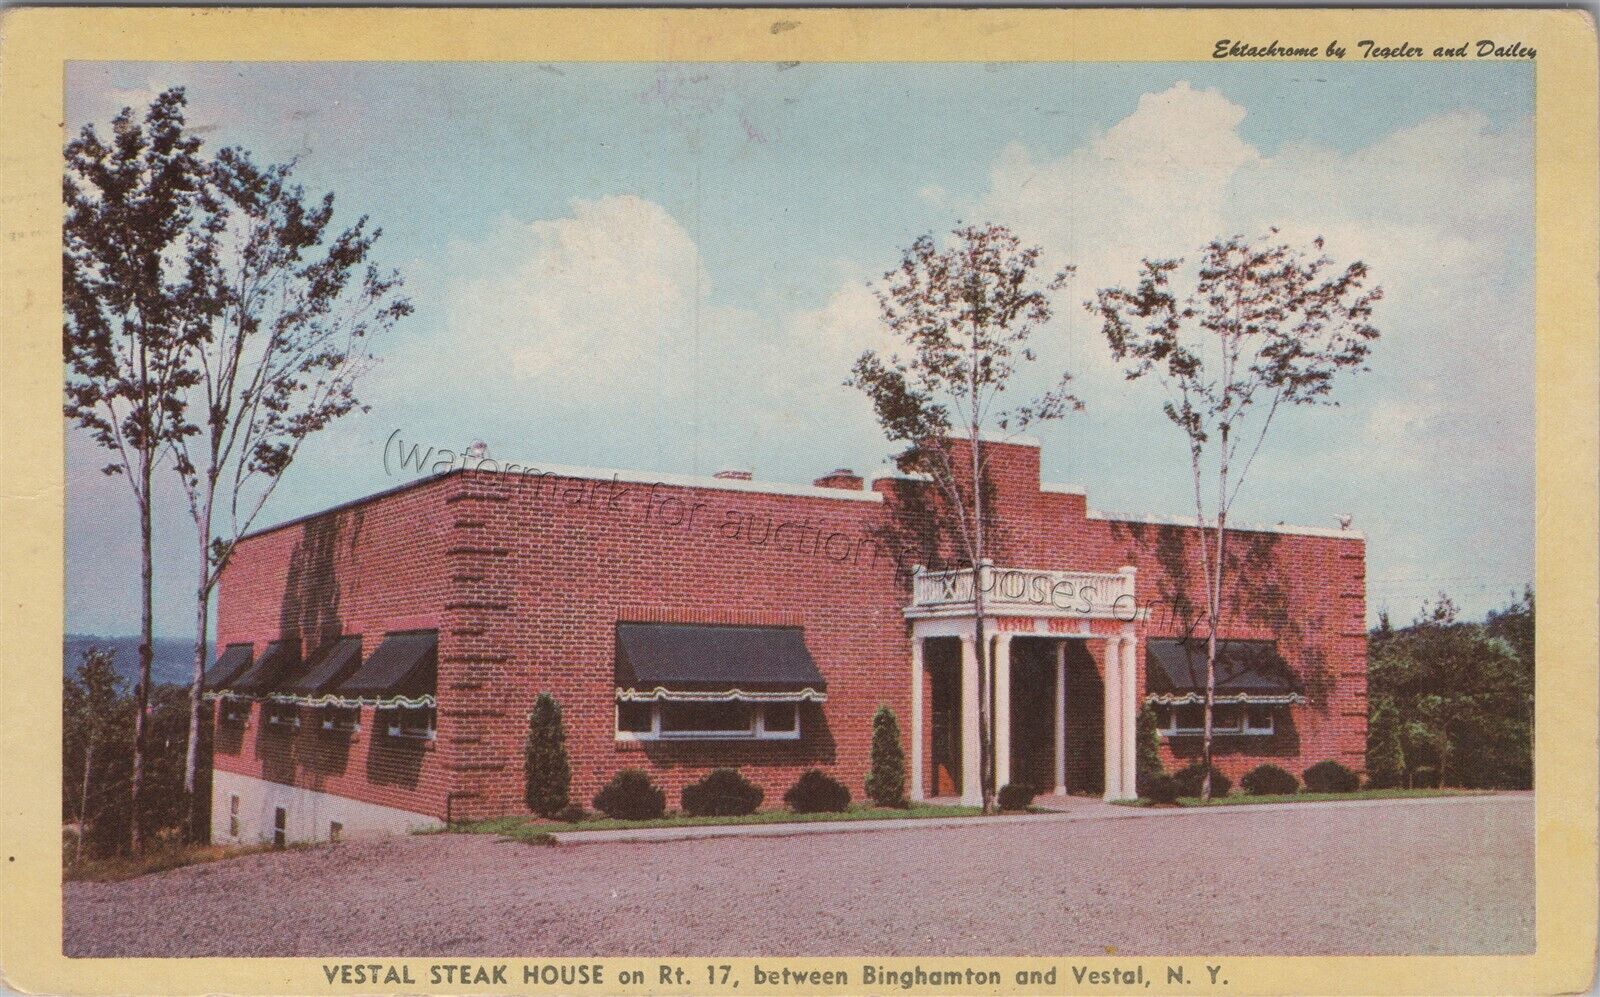 Vestal Steak House, NY: Near Binghamton 1958 - Vtg New York Restaurant Postcard